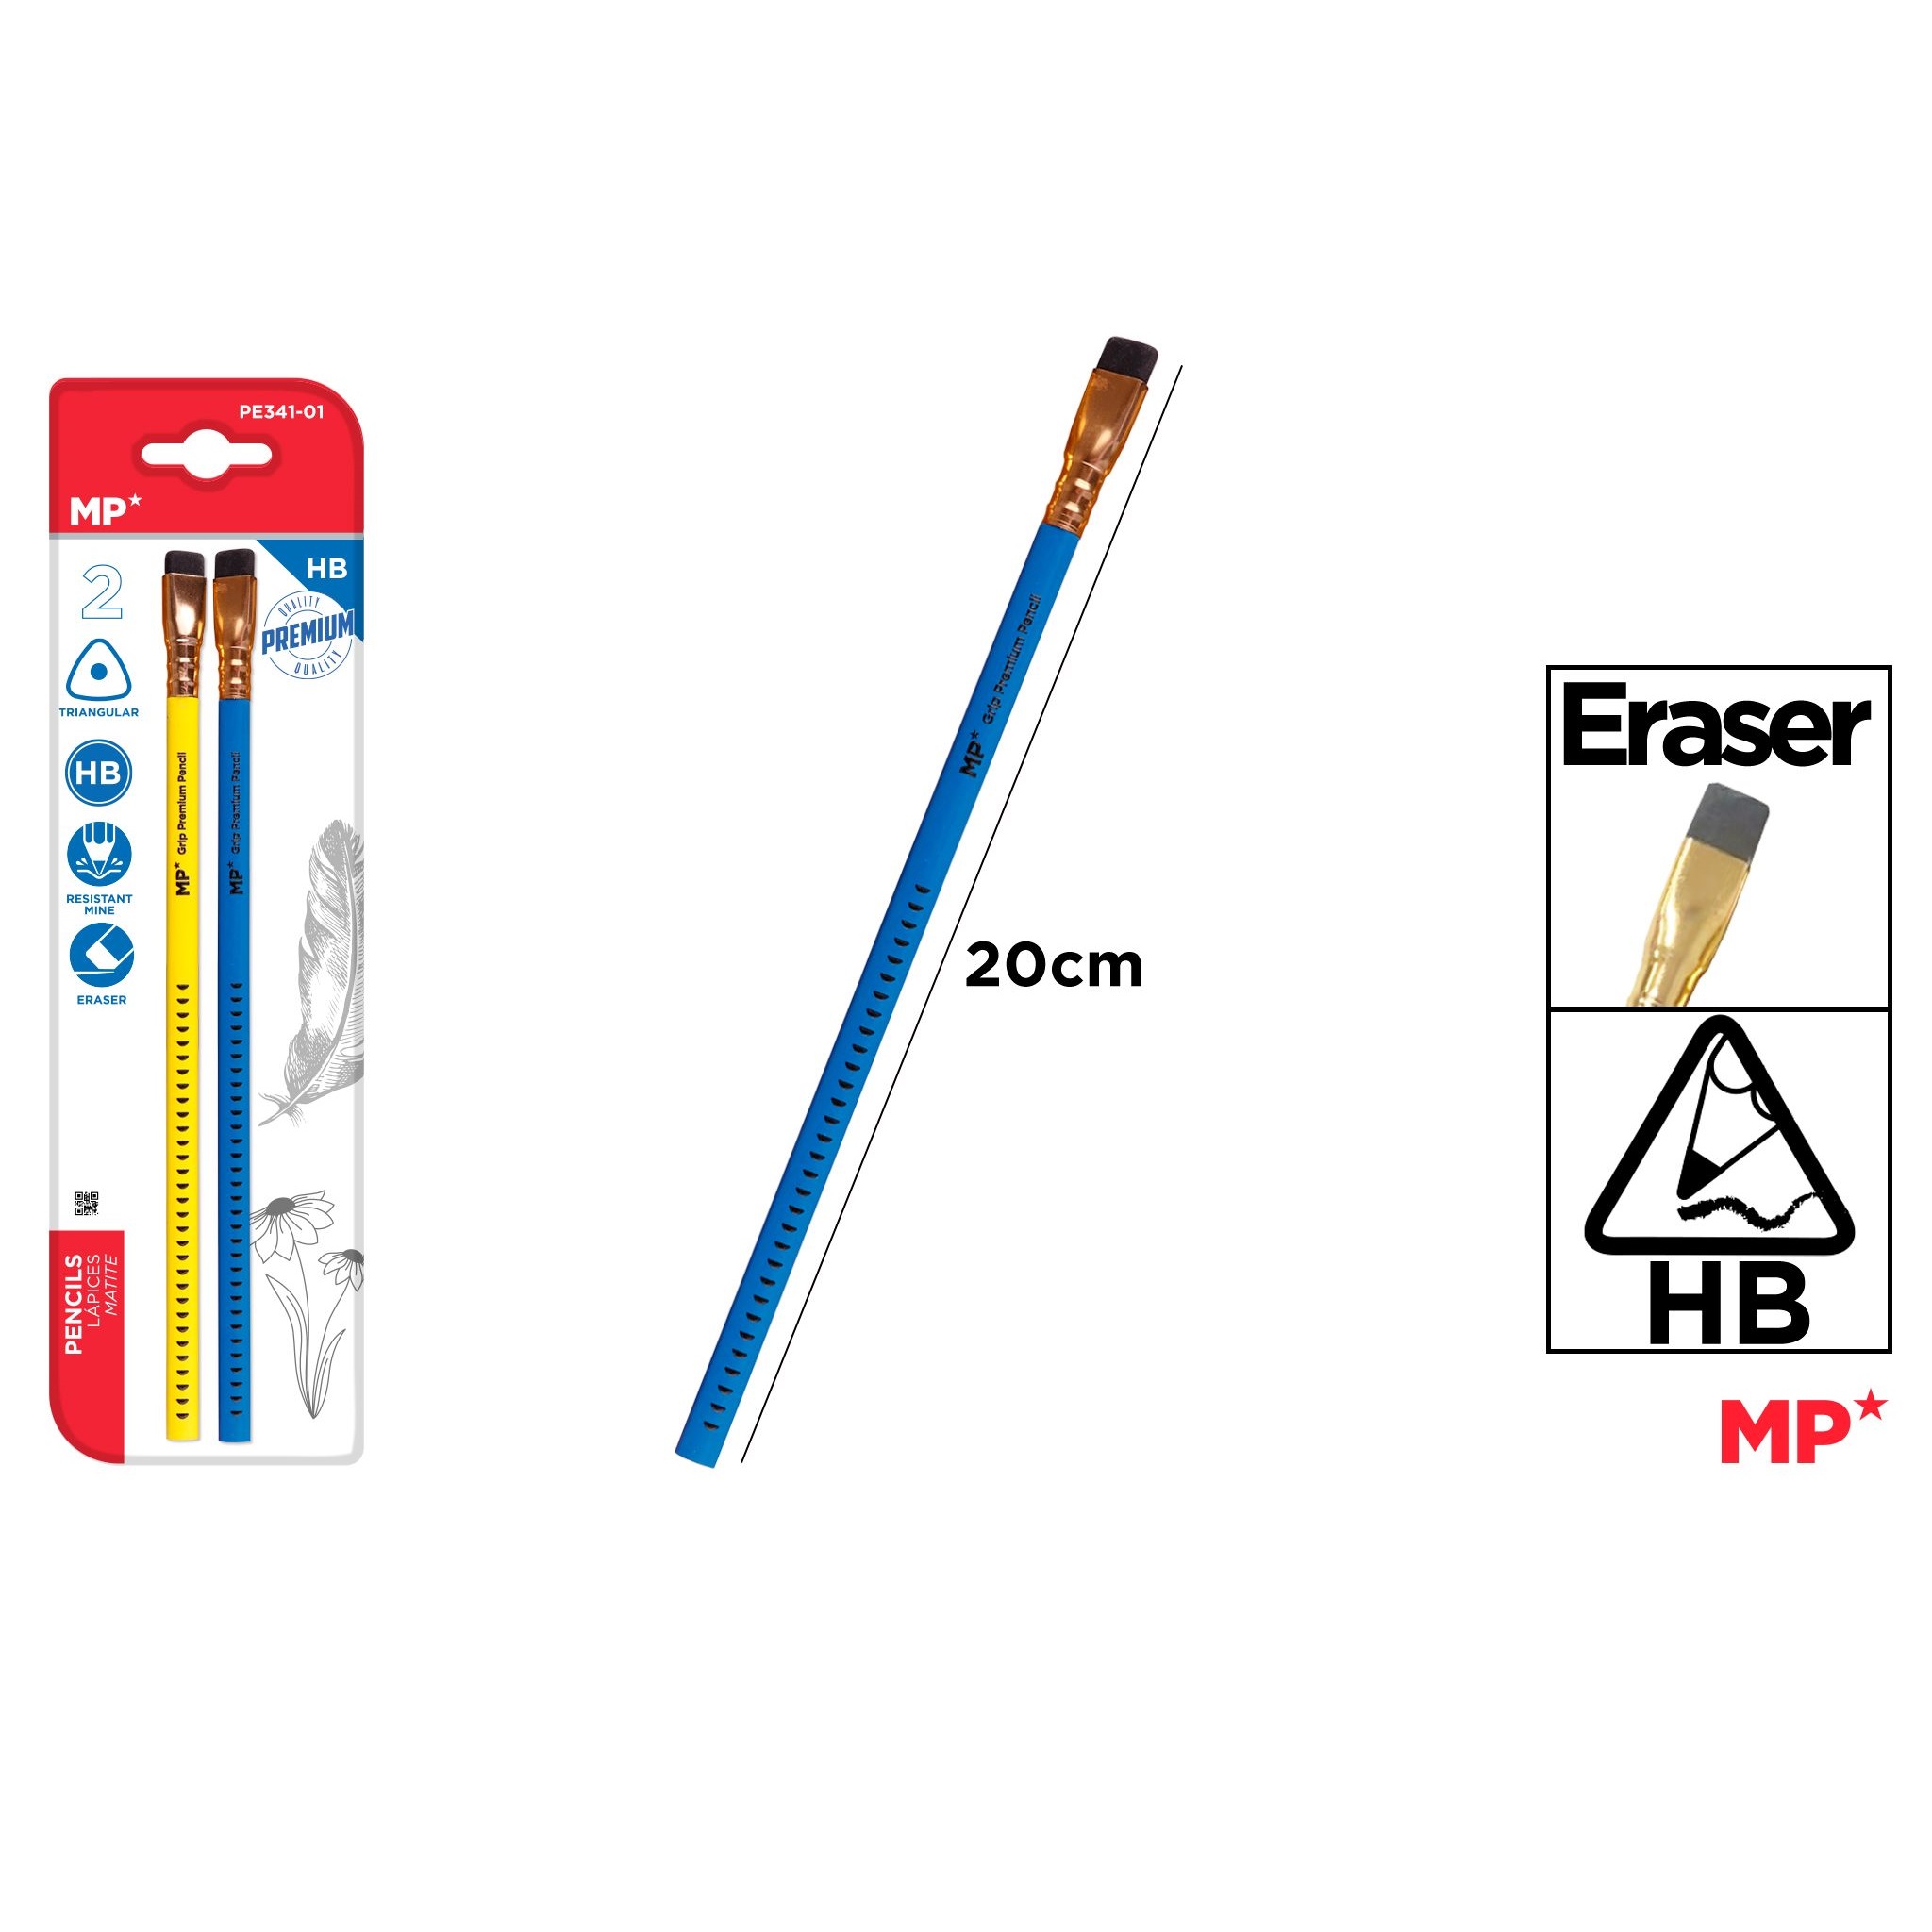 PE341 Premium Drawing Pencil Set Pencil with Eraser Premium Grip Pencil Production and Supply